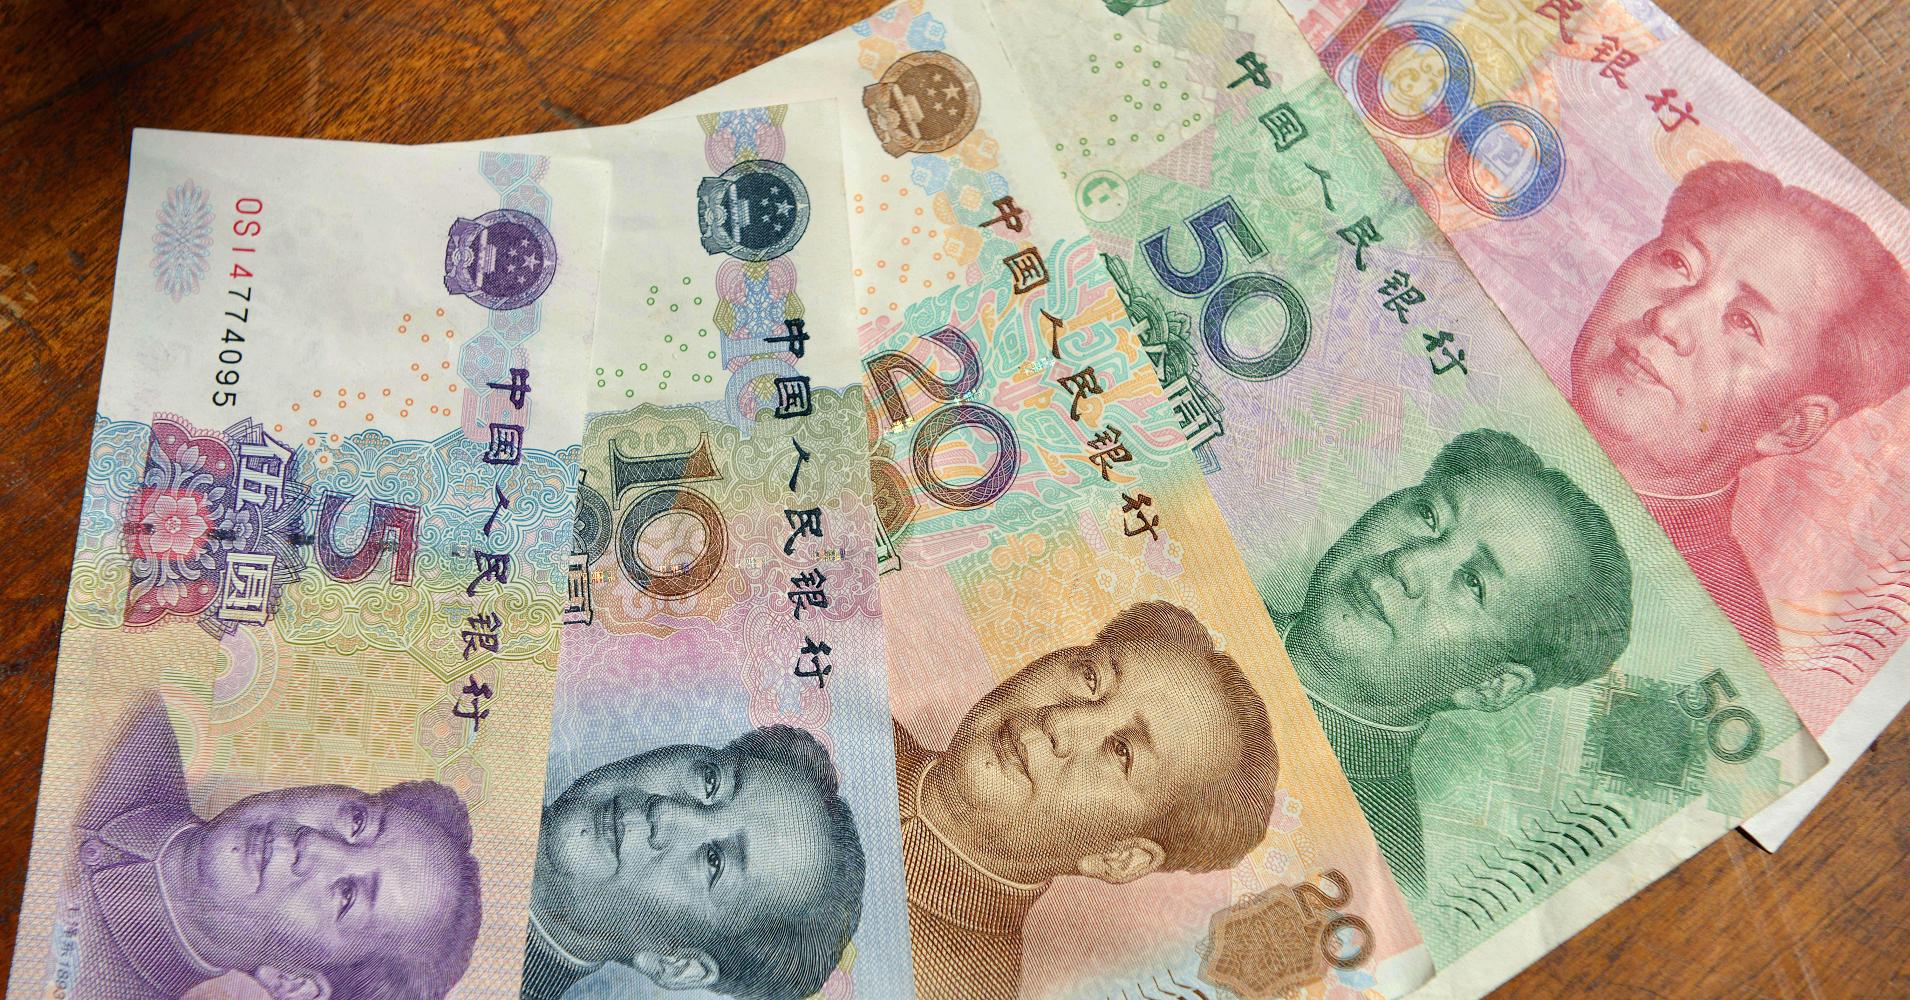 Июань. Валюта Китая юань. Китайский юань купюры. Денежная единица Китая юань. Нац валюта Китая.